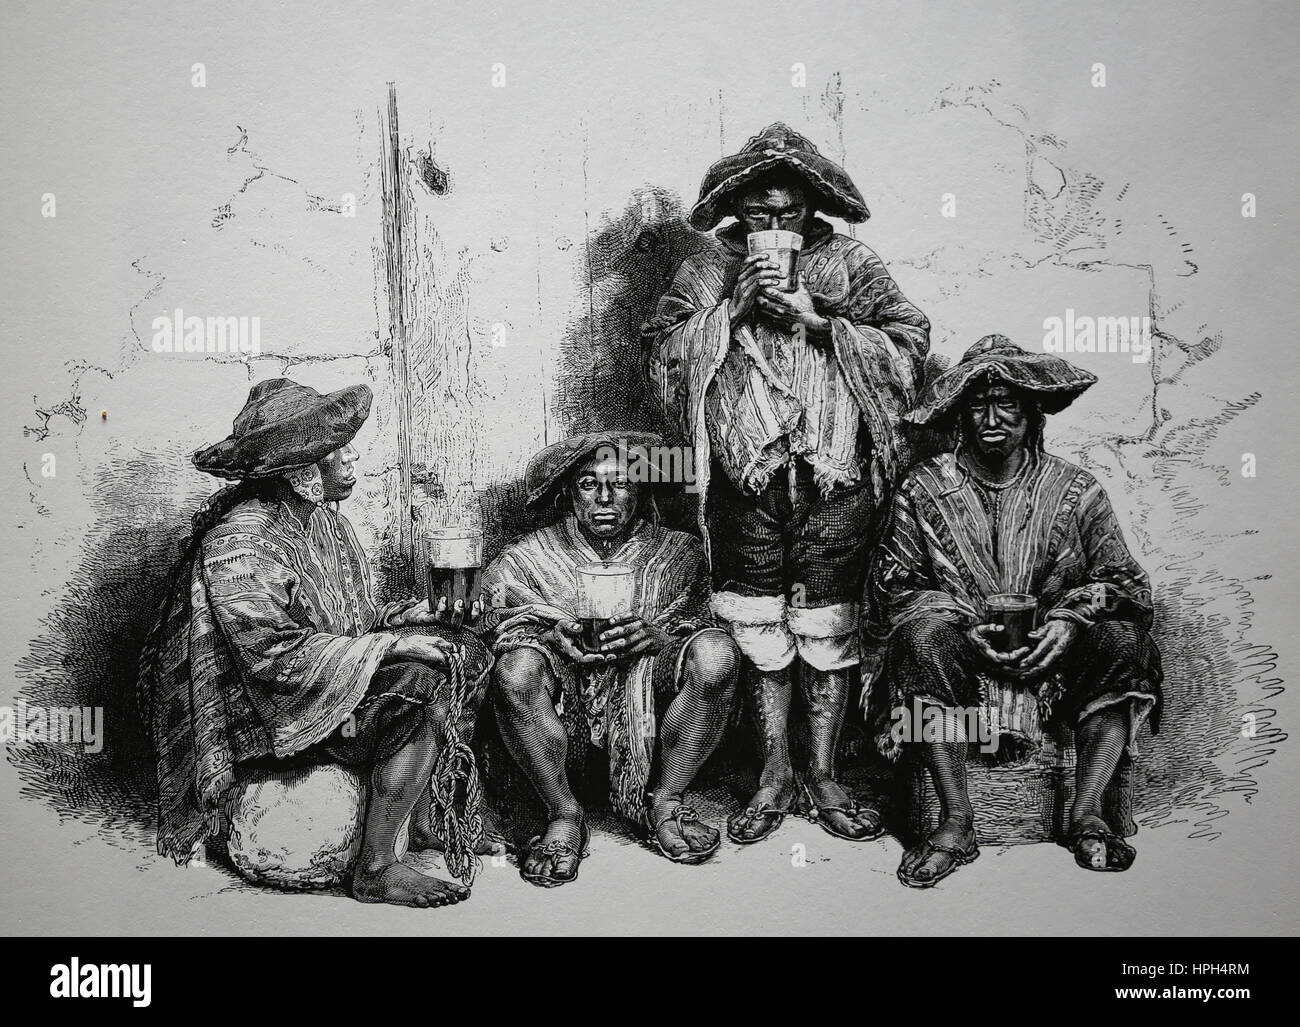 South America. Peru. Indigenous Peruvians. Engraving, 1855. Stock Photo